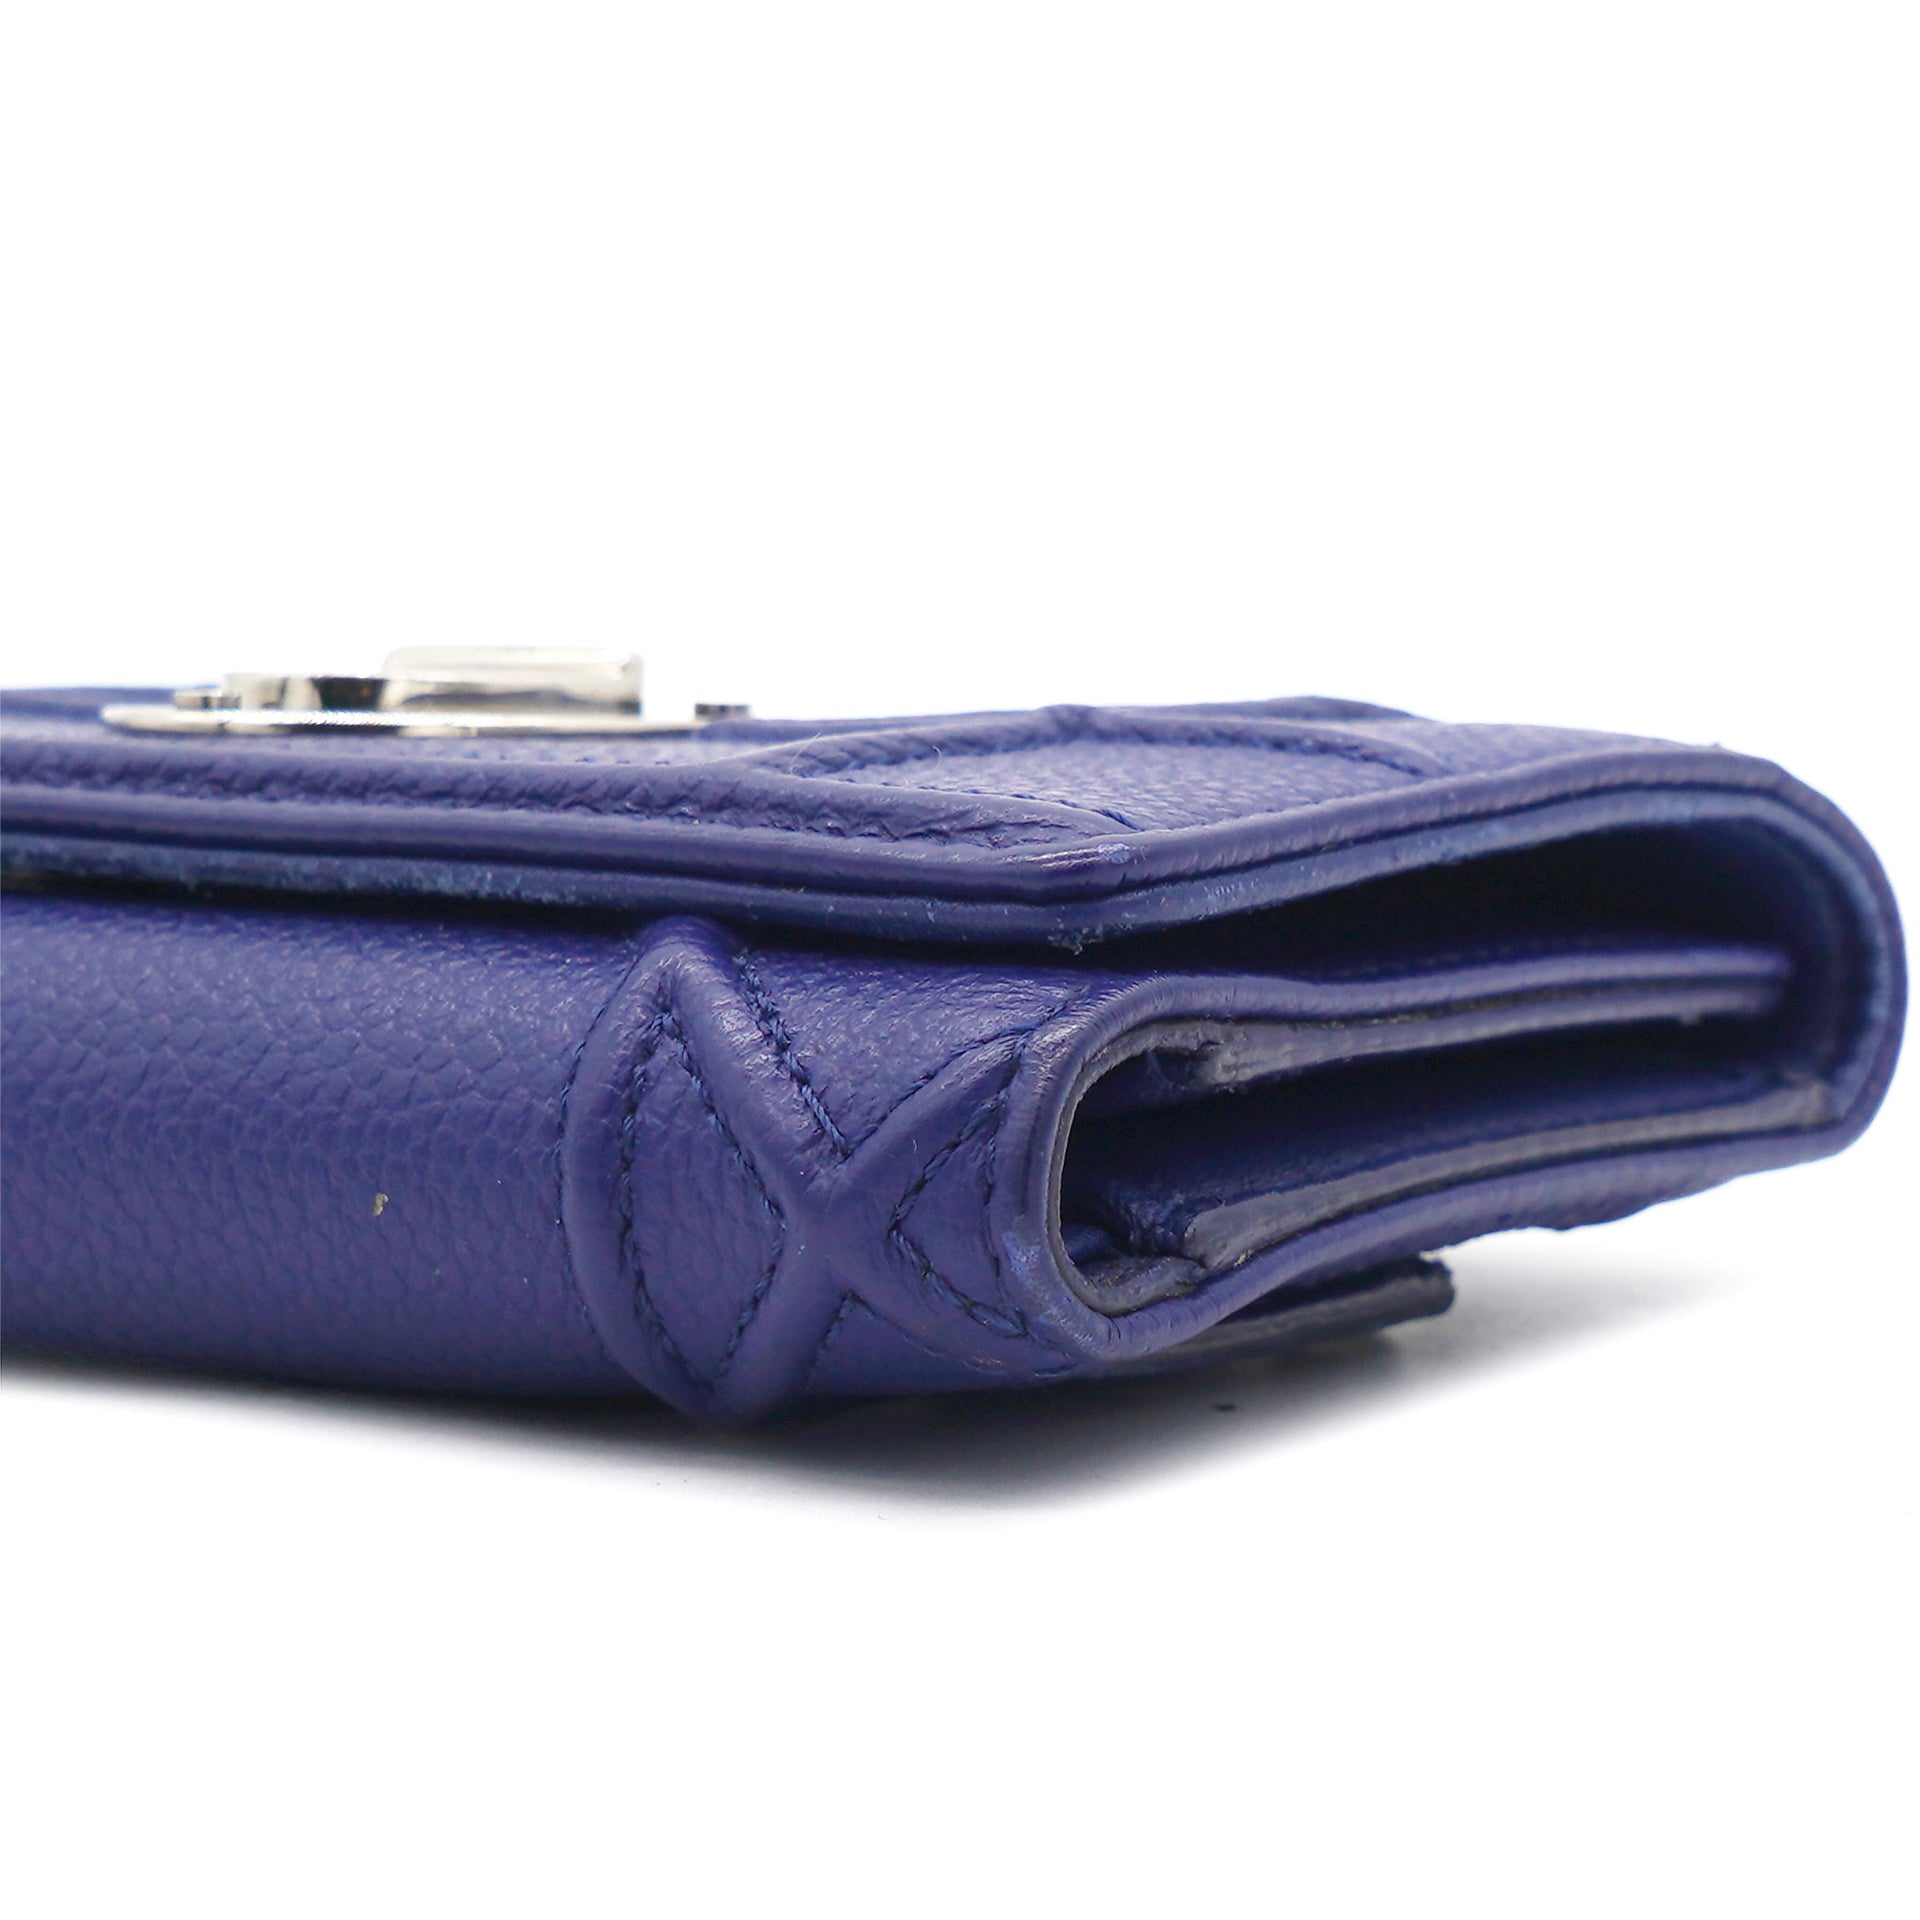 Diorama Wallet Blue